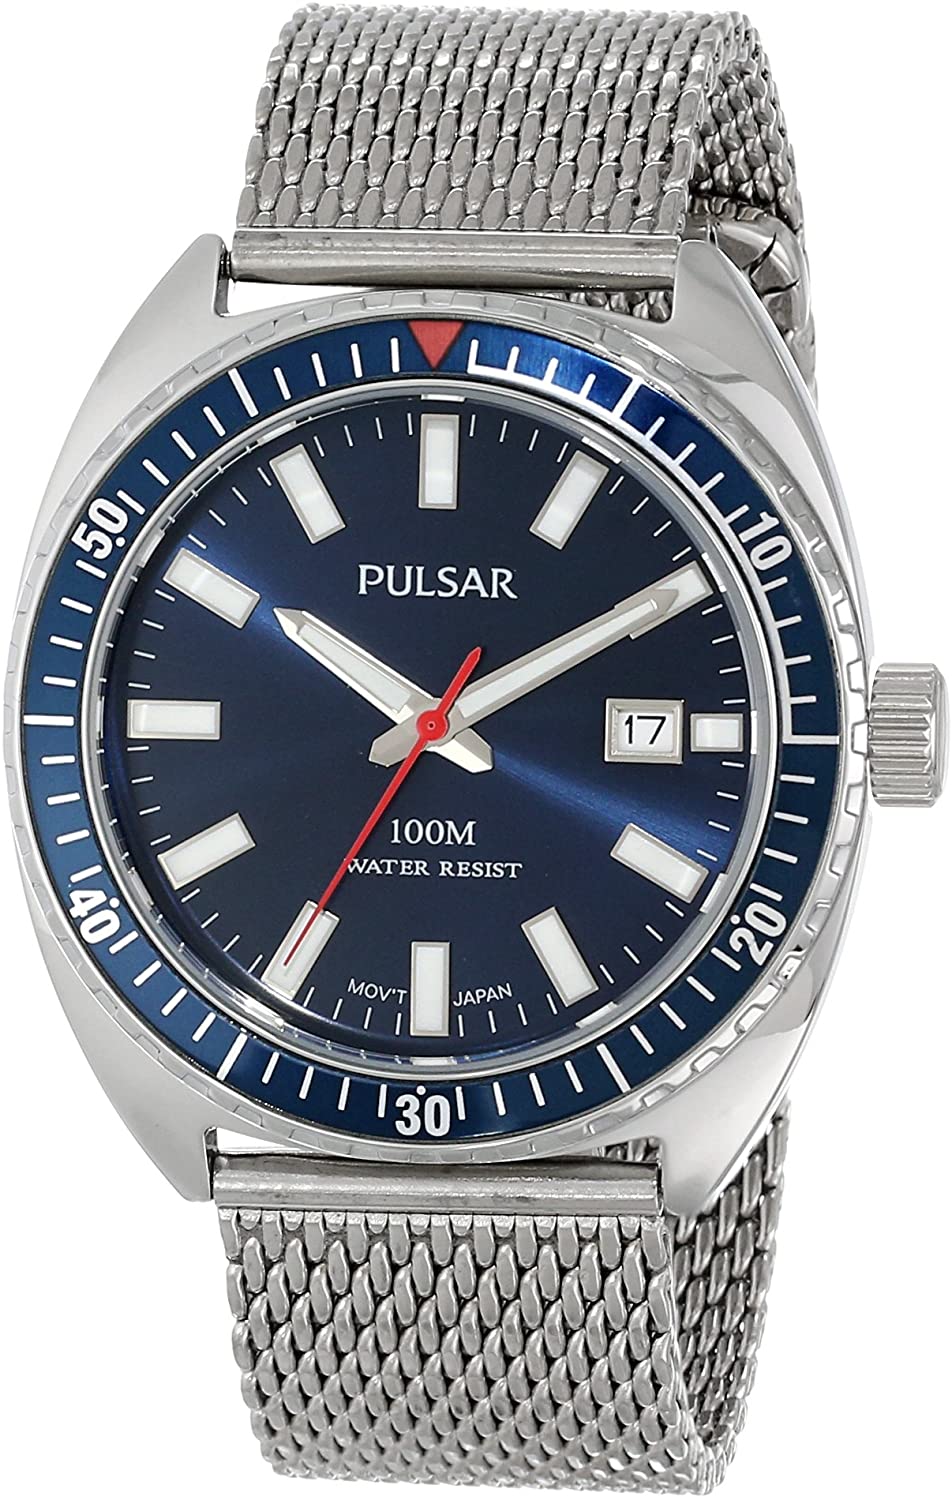 Pulsar Men's PS9229 Analog Display Japanese Quartz Silver Watch